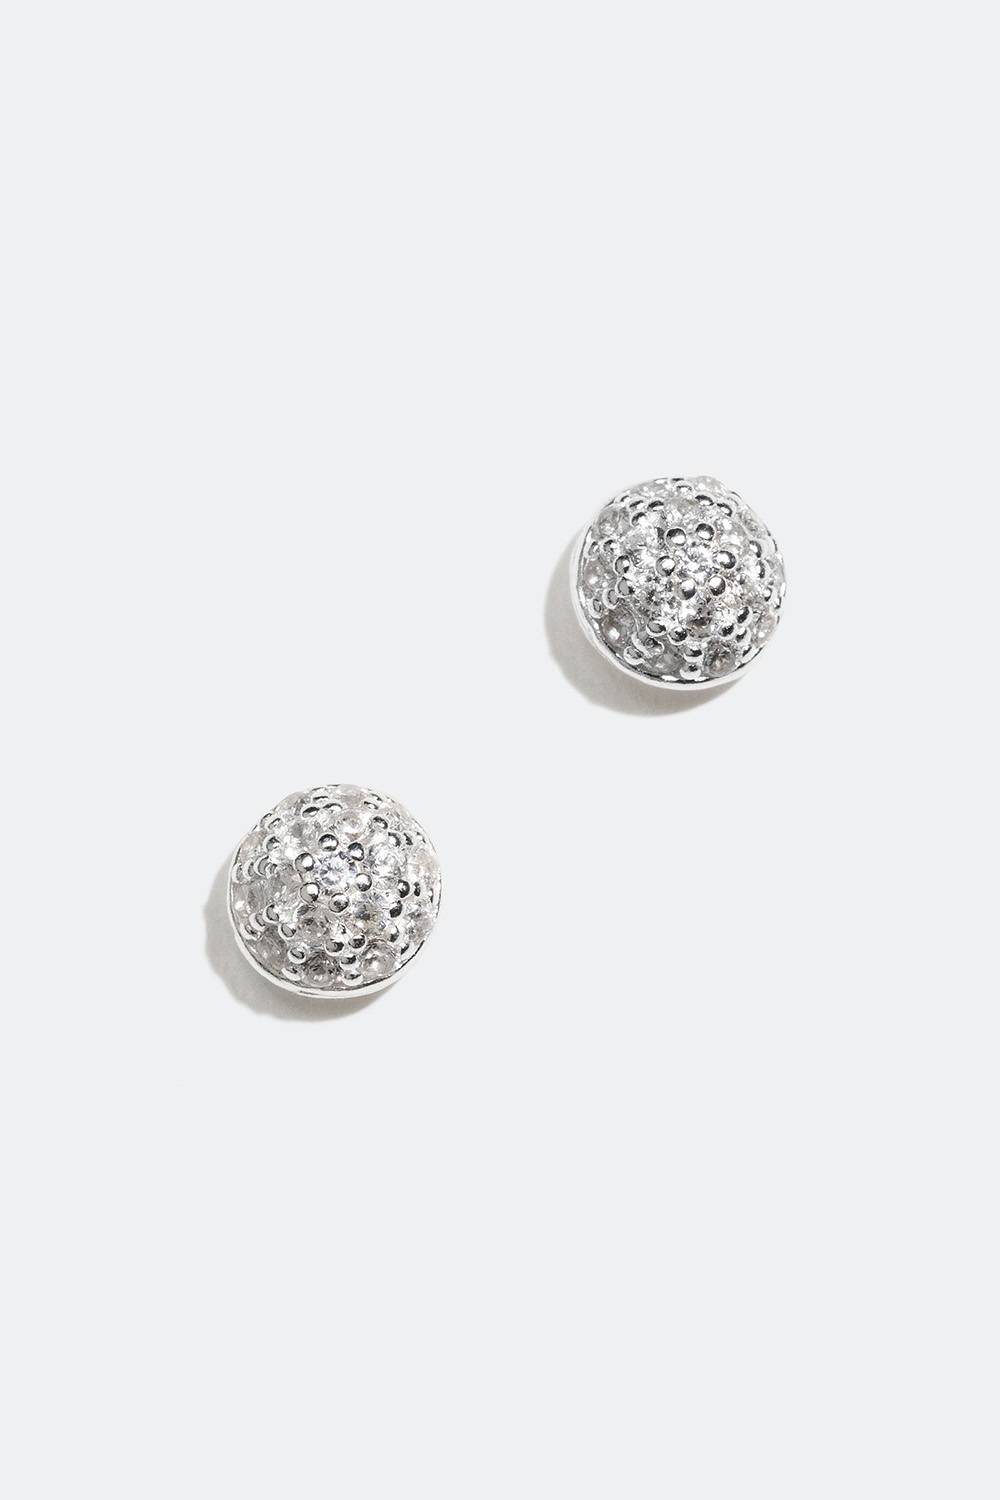 Runde ørestikker i ægte sølv med sten i kubisk zirkonia i gruppen Smykker / Øreringe / Ørestikker hos Glitter (553001831000)